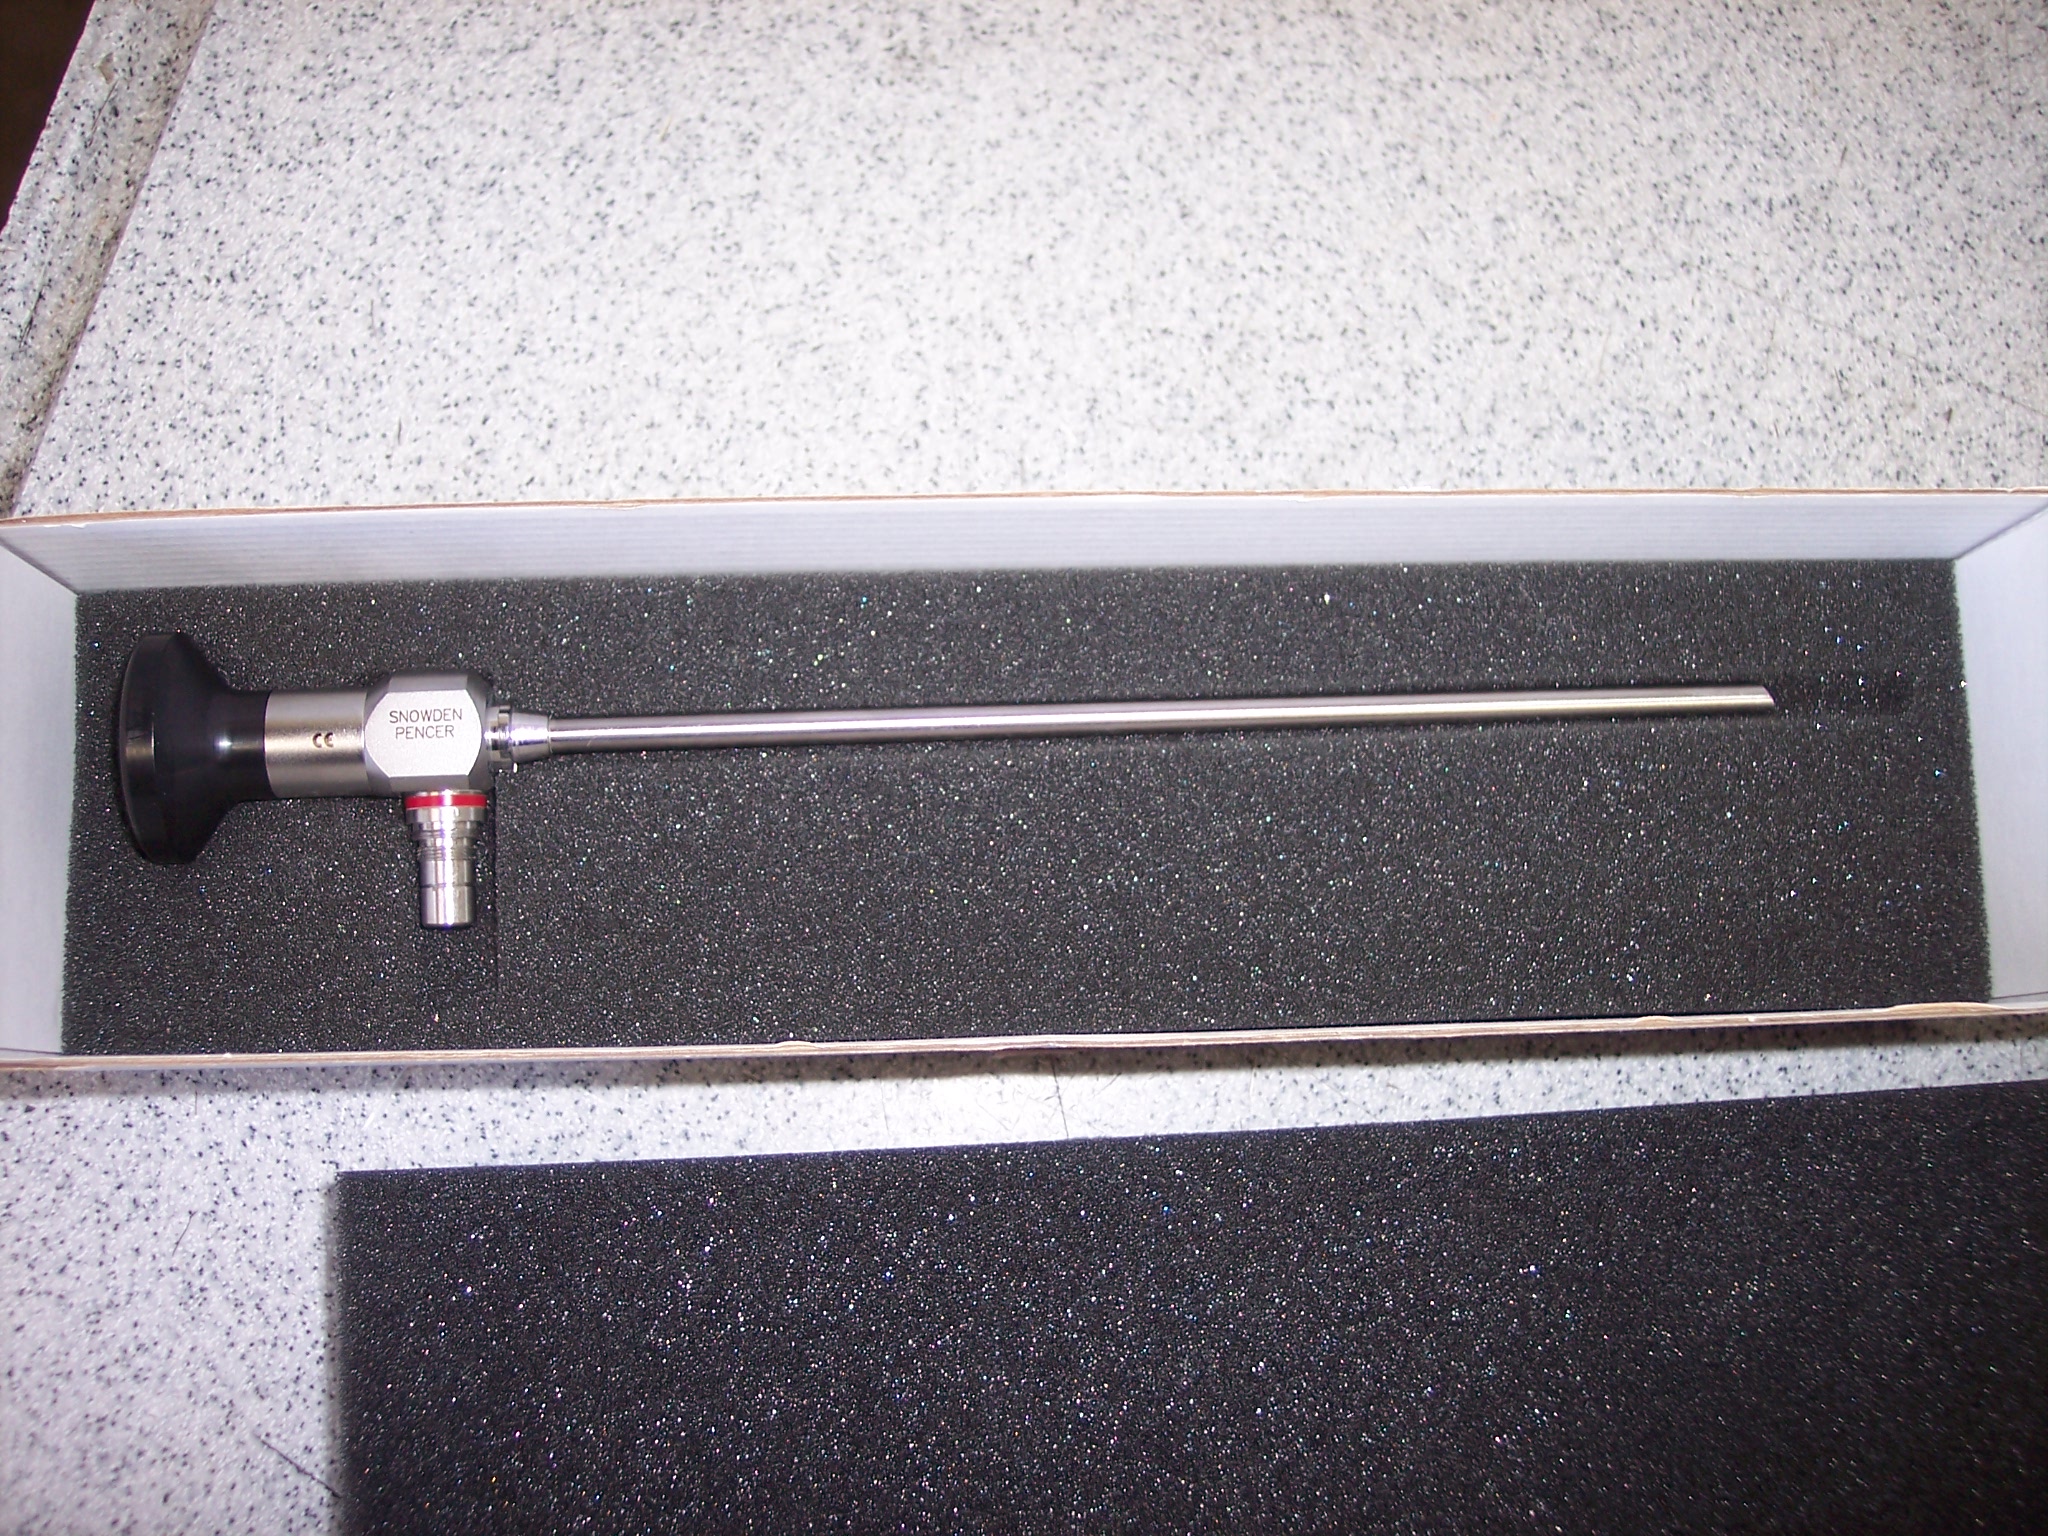 Snowden Pencer 88-5920 30 Degree, 5mm Rigid Laparoscope